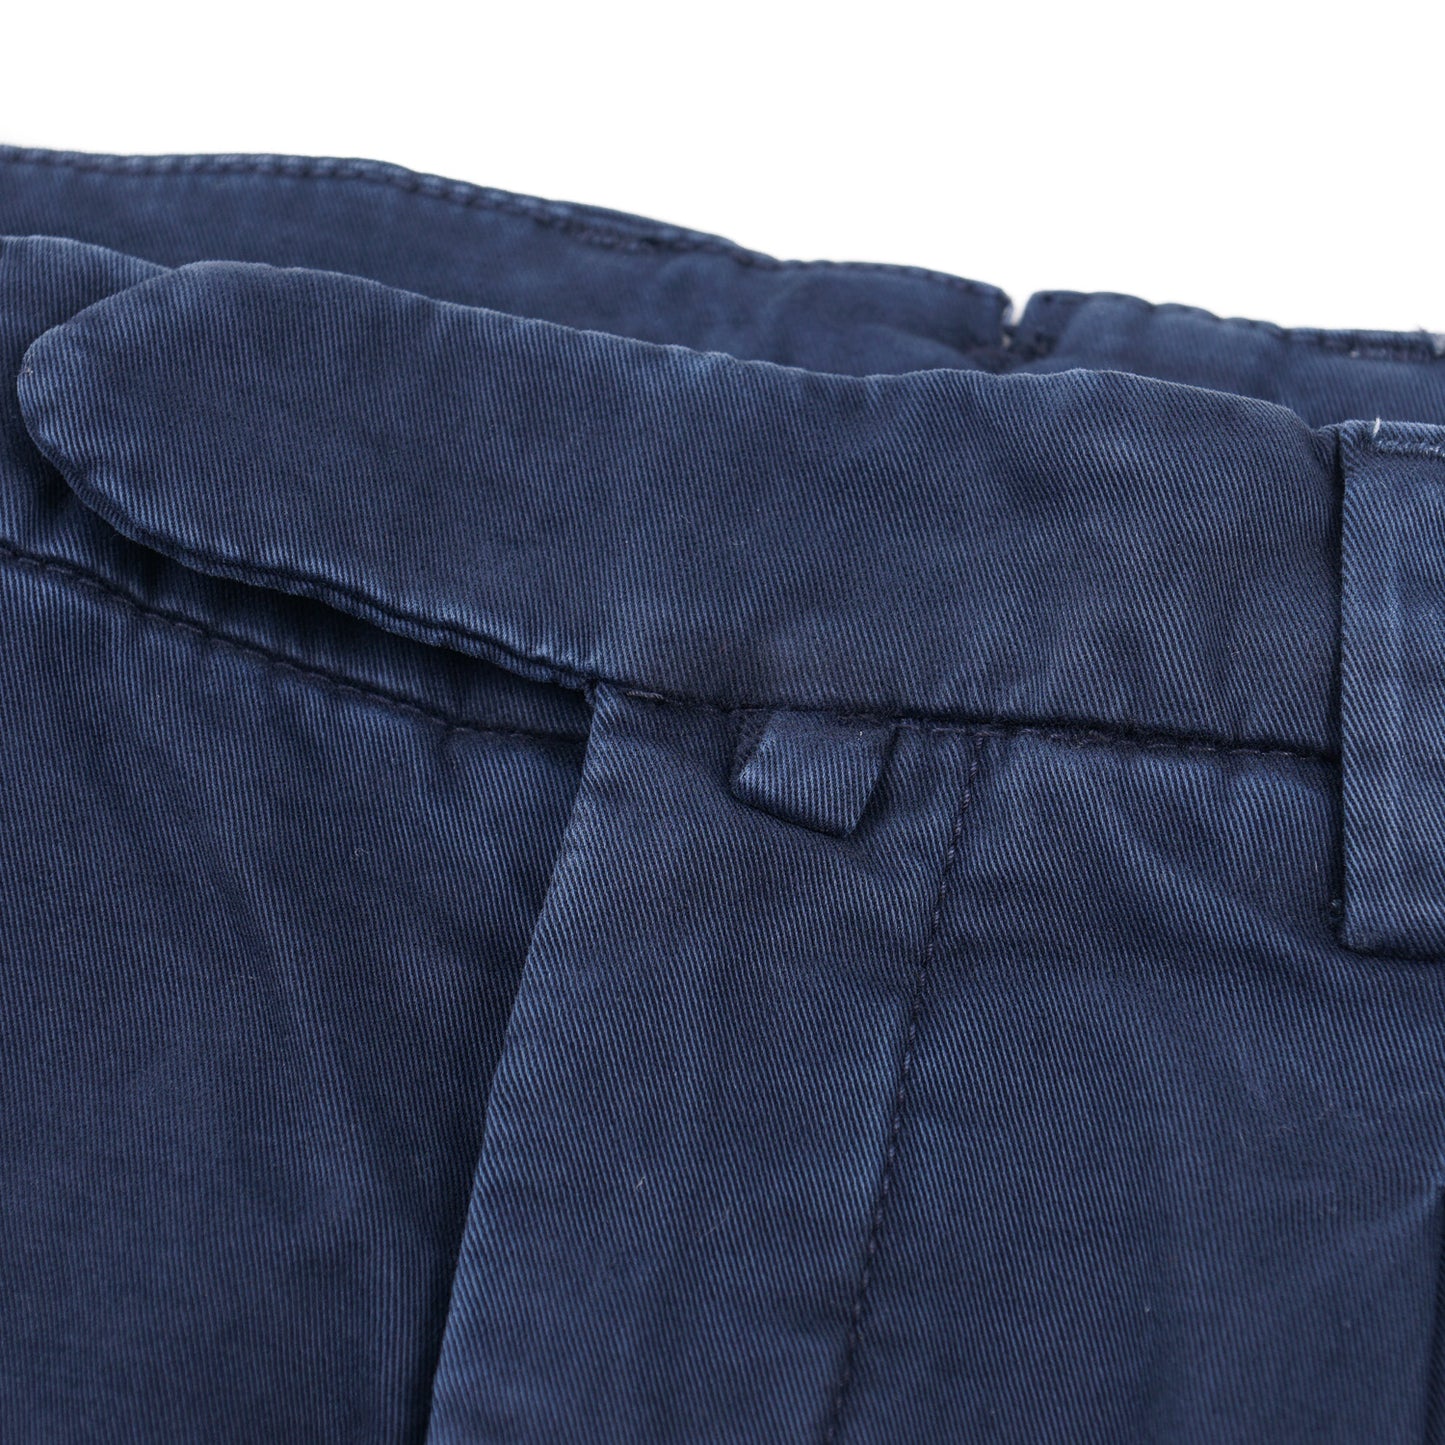 Luigi Borrelli Cotton Pants with Cargo Pockets - Top Shelf Apparel